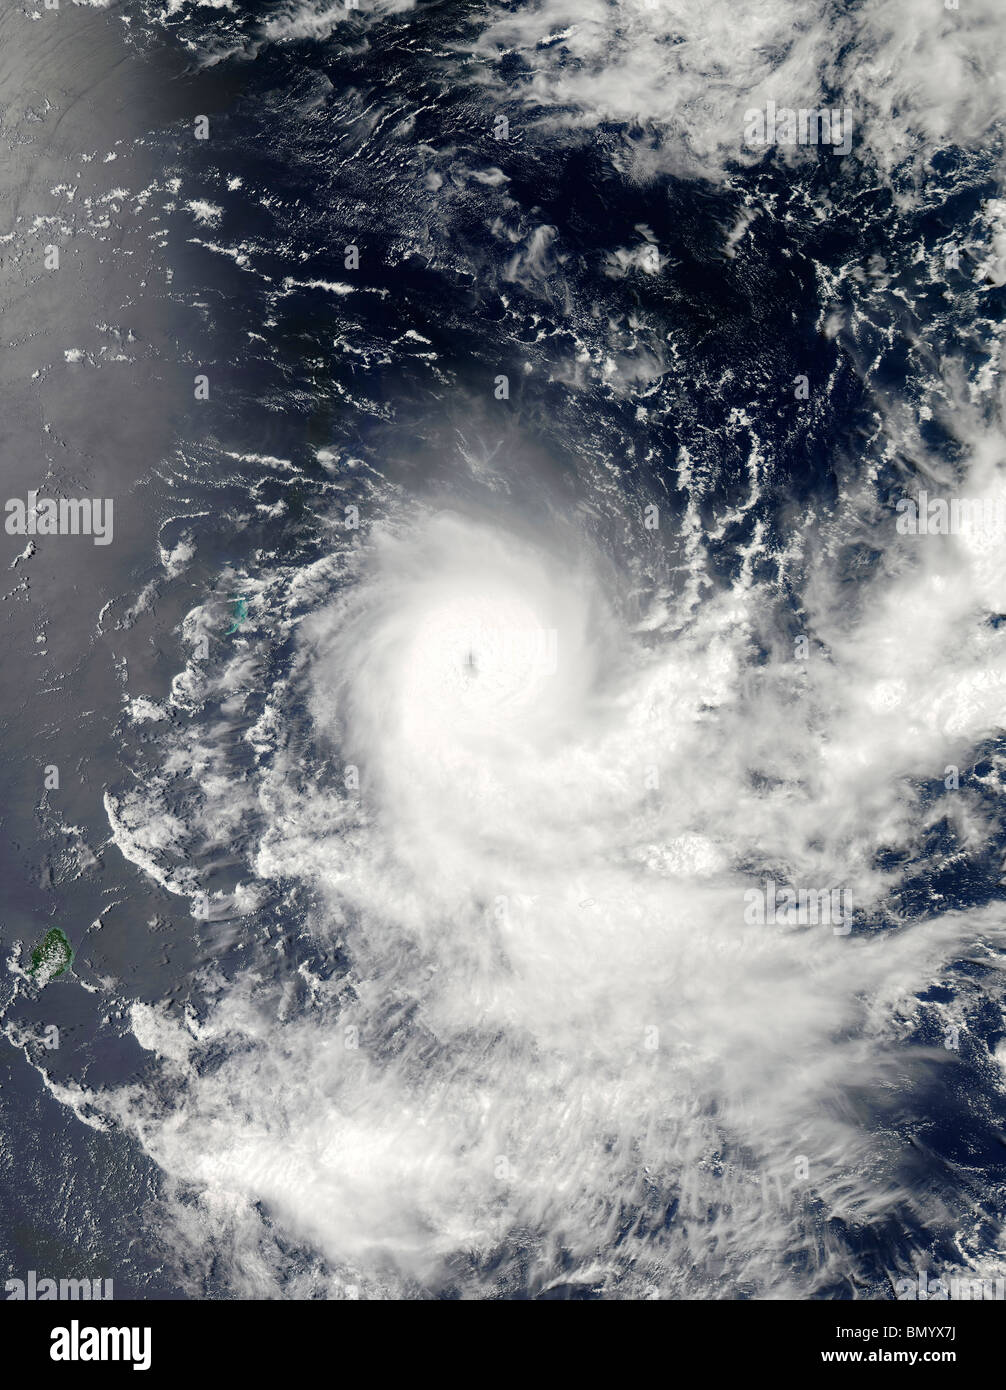 Febbraio 19, 2010 - ciclone tropicale Gelane est-nord-est di Port Louis, Mauritius. Foto Stock